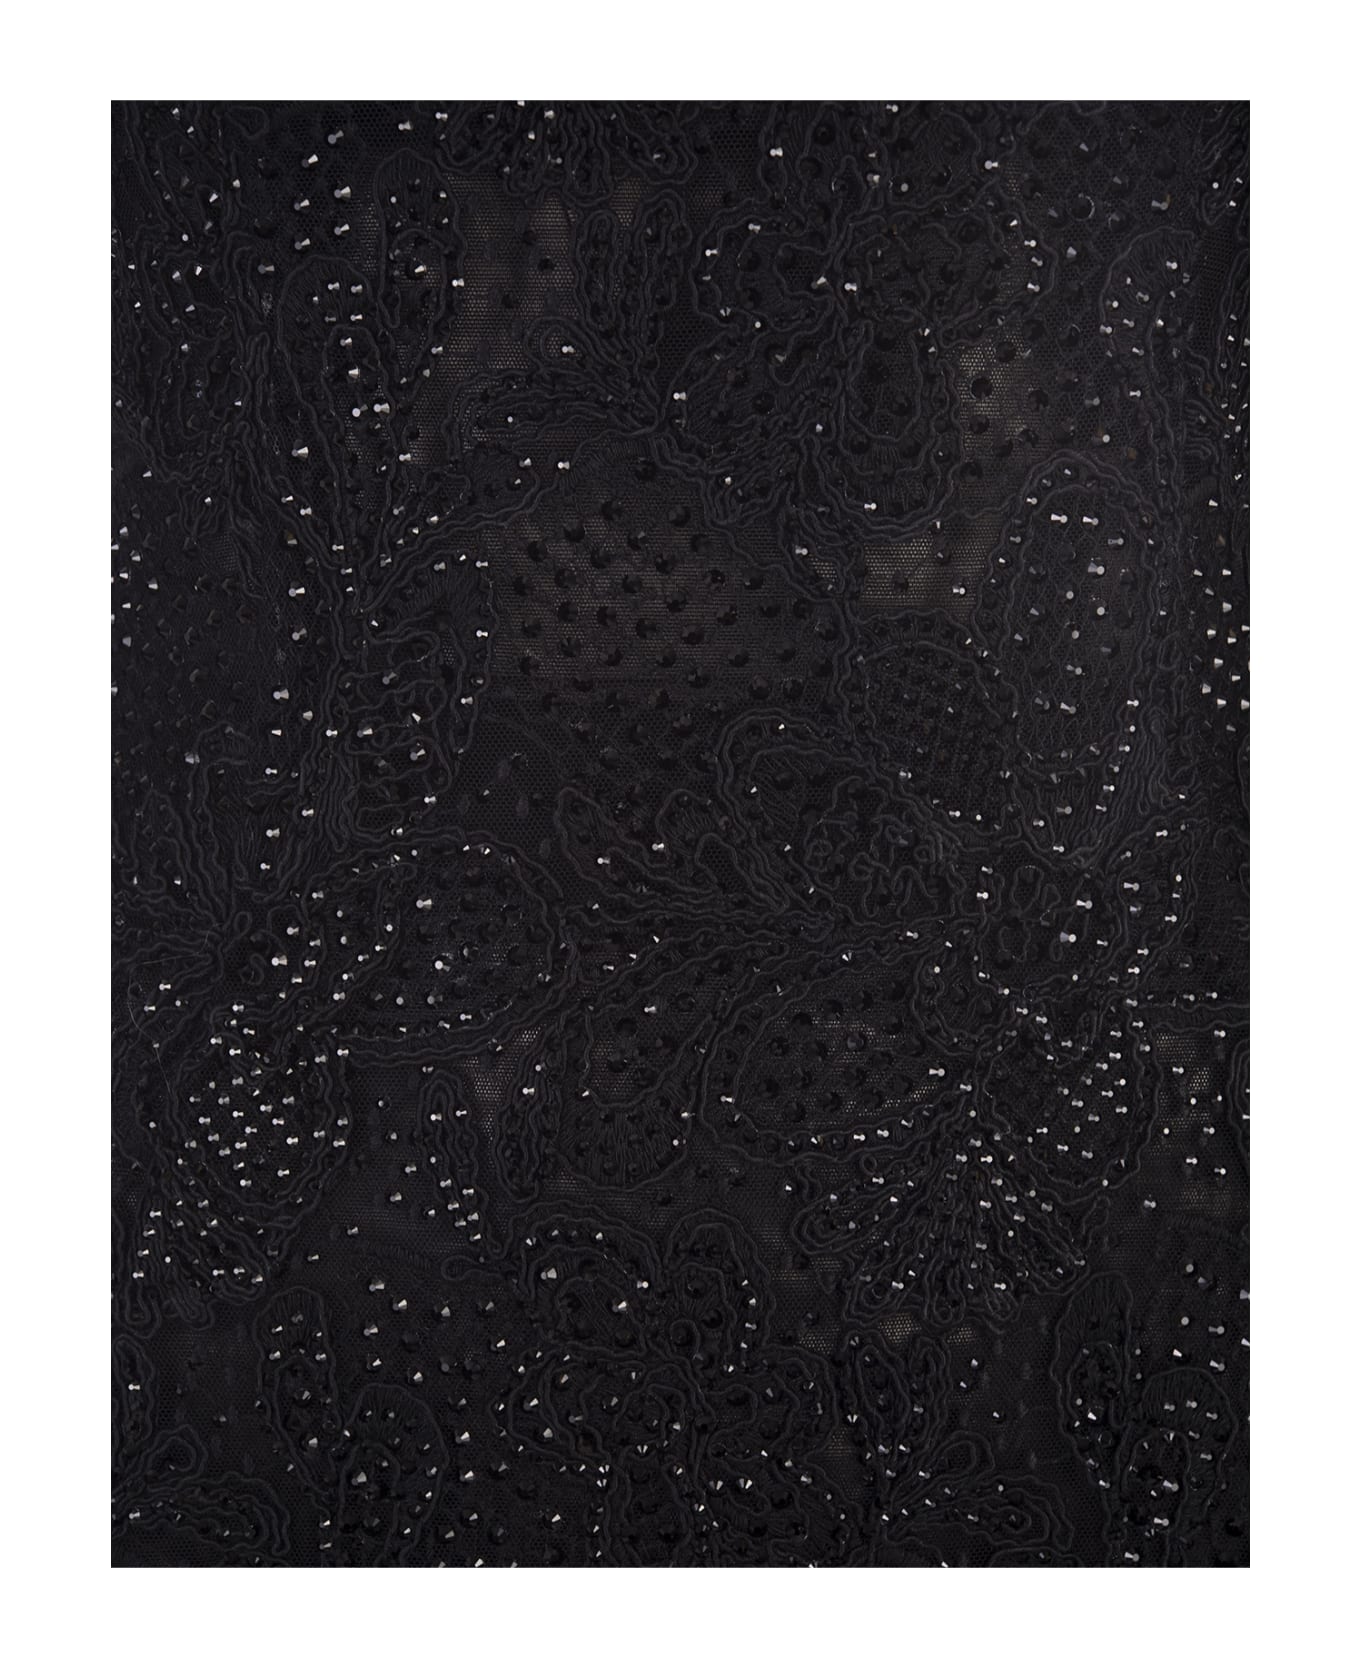 Ermanno Scervino Midi Dress In Black Lace With Crystals - Black ワンピース＆ドレス